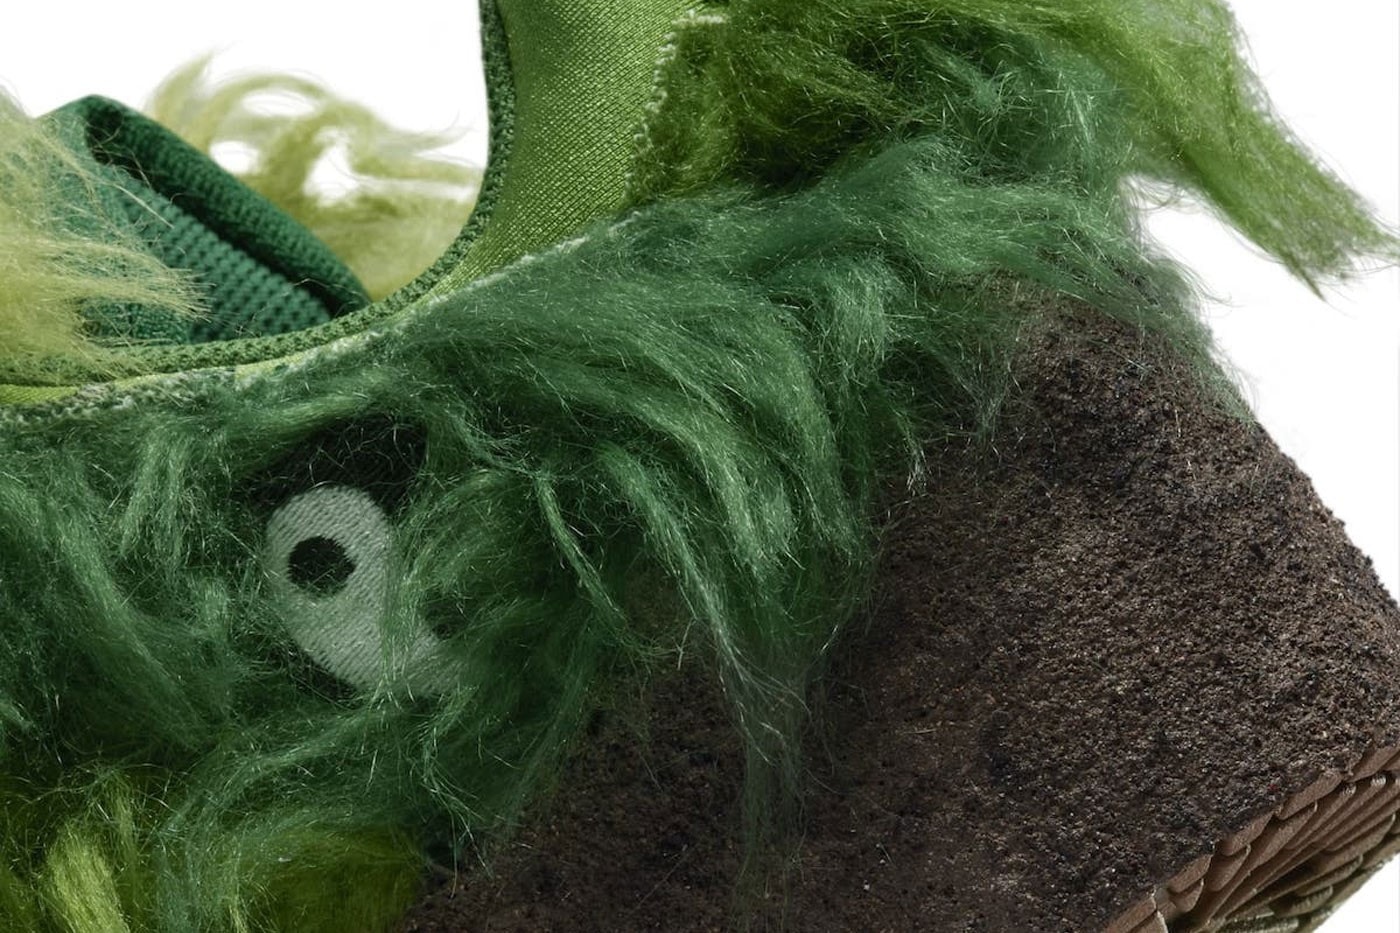 Cactus Plant Flea Market x Nike Dunk Low 最新聯名鞋款官方圖輯率先曝光